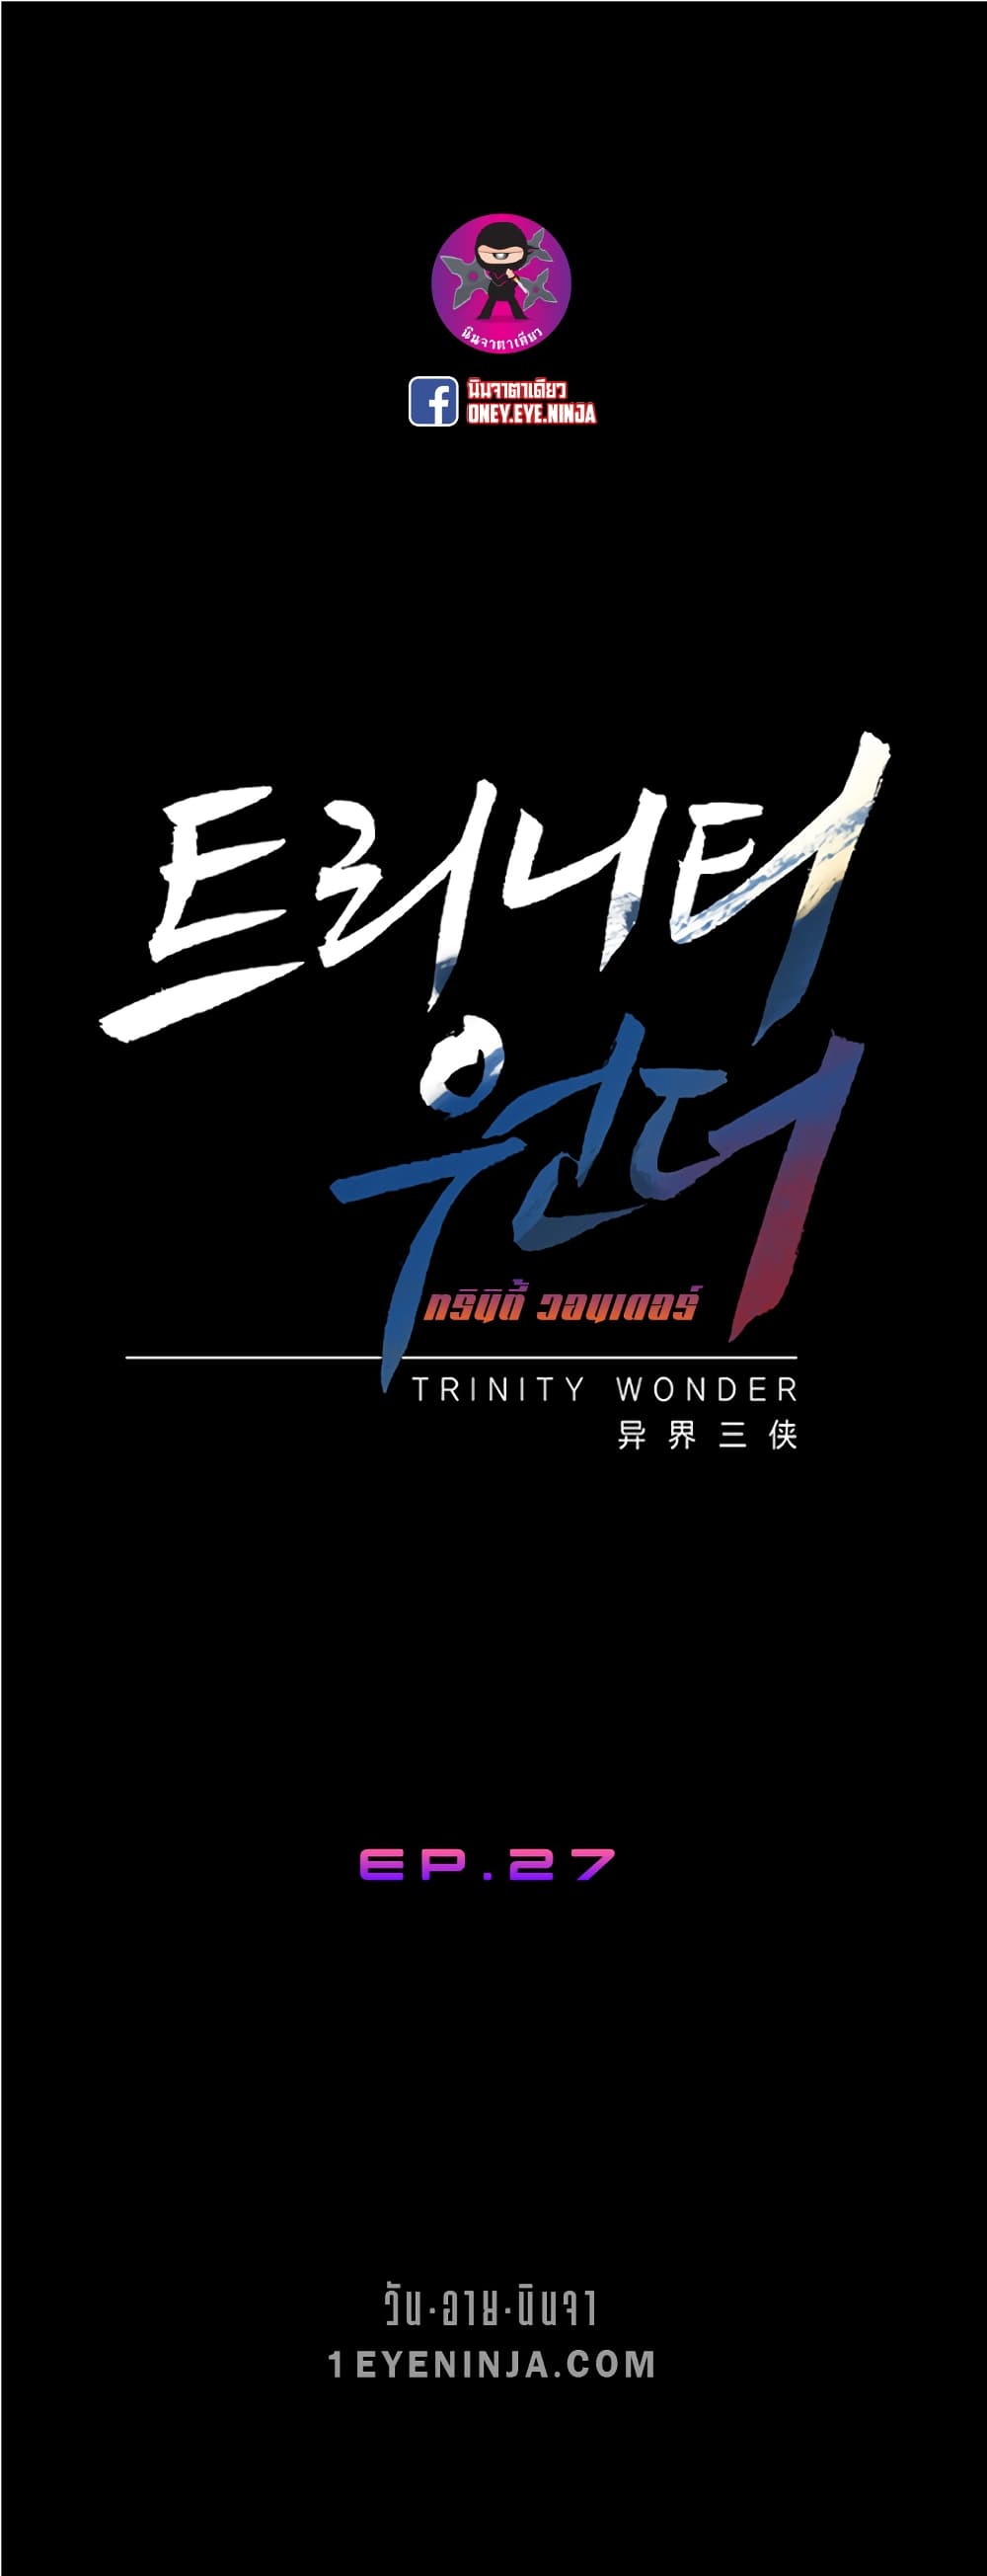 Trinity Wonder 27-27